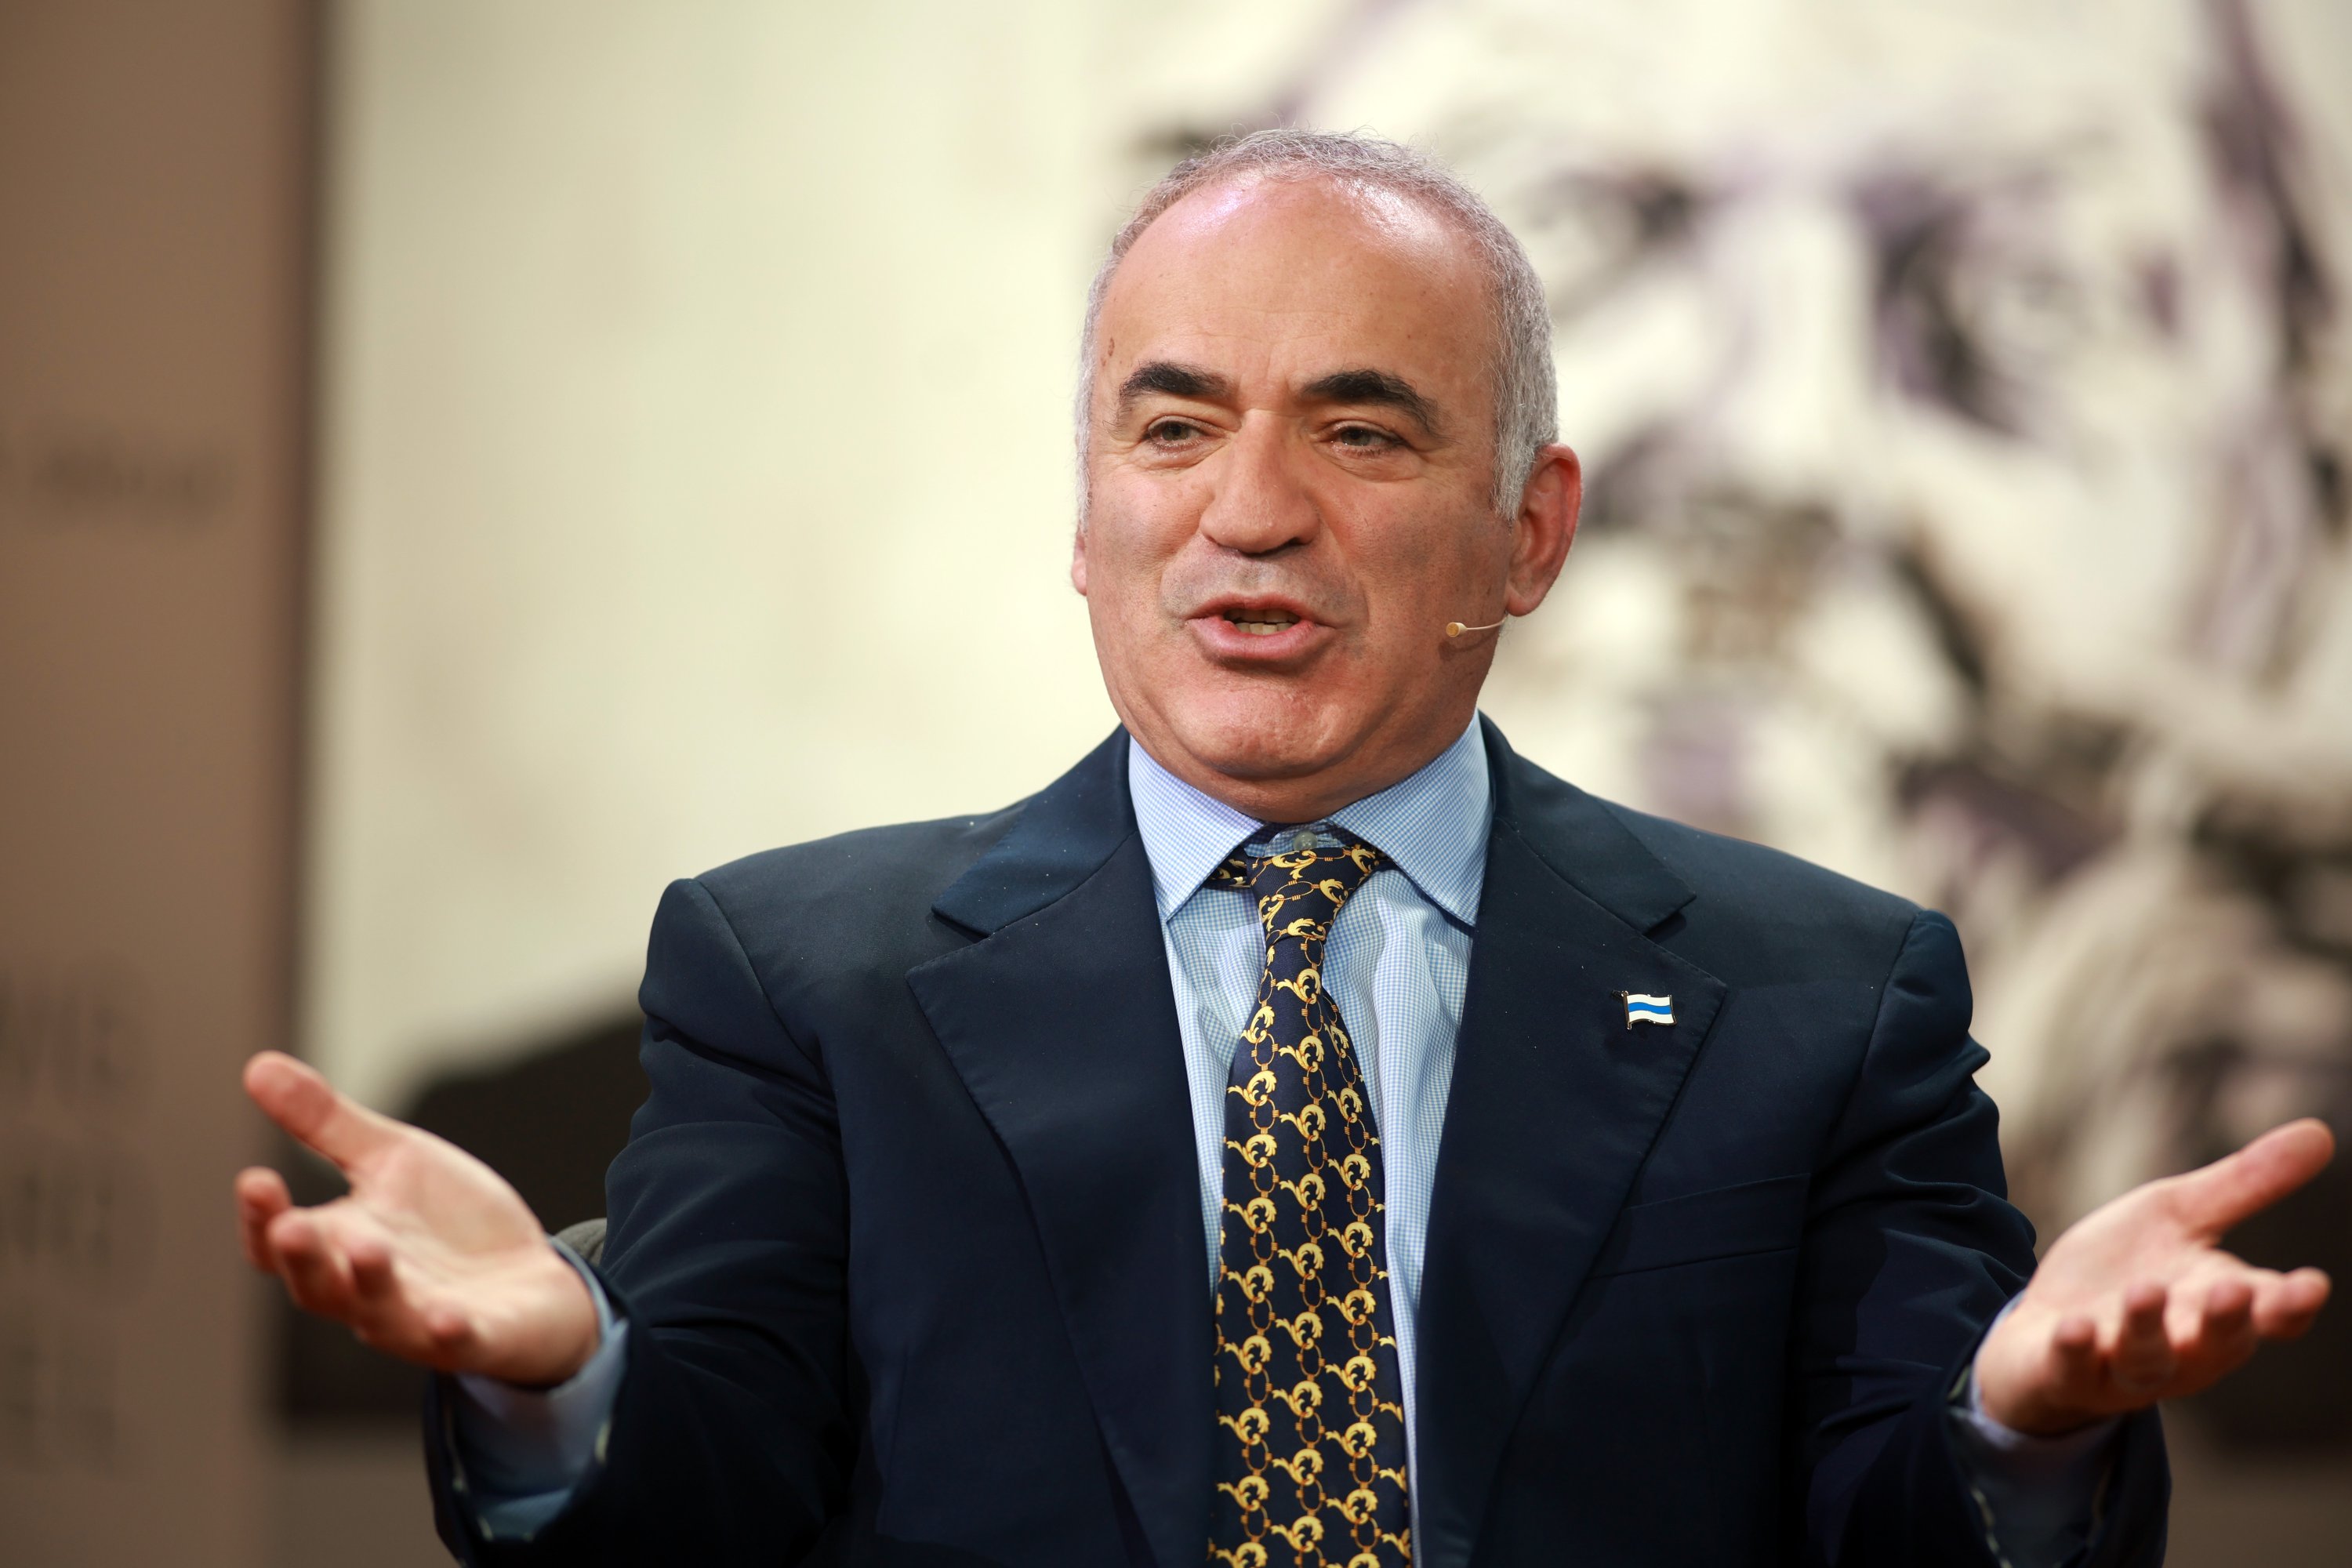 Garry Kasparov: Russia's tech threat is 'tactical,' China's 'strategic